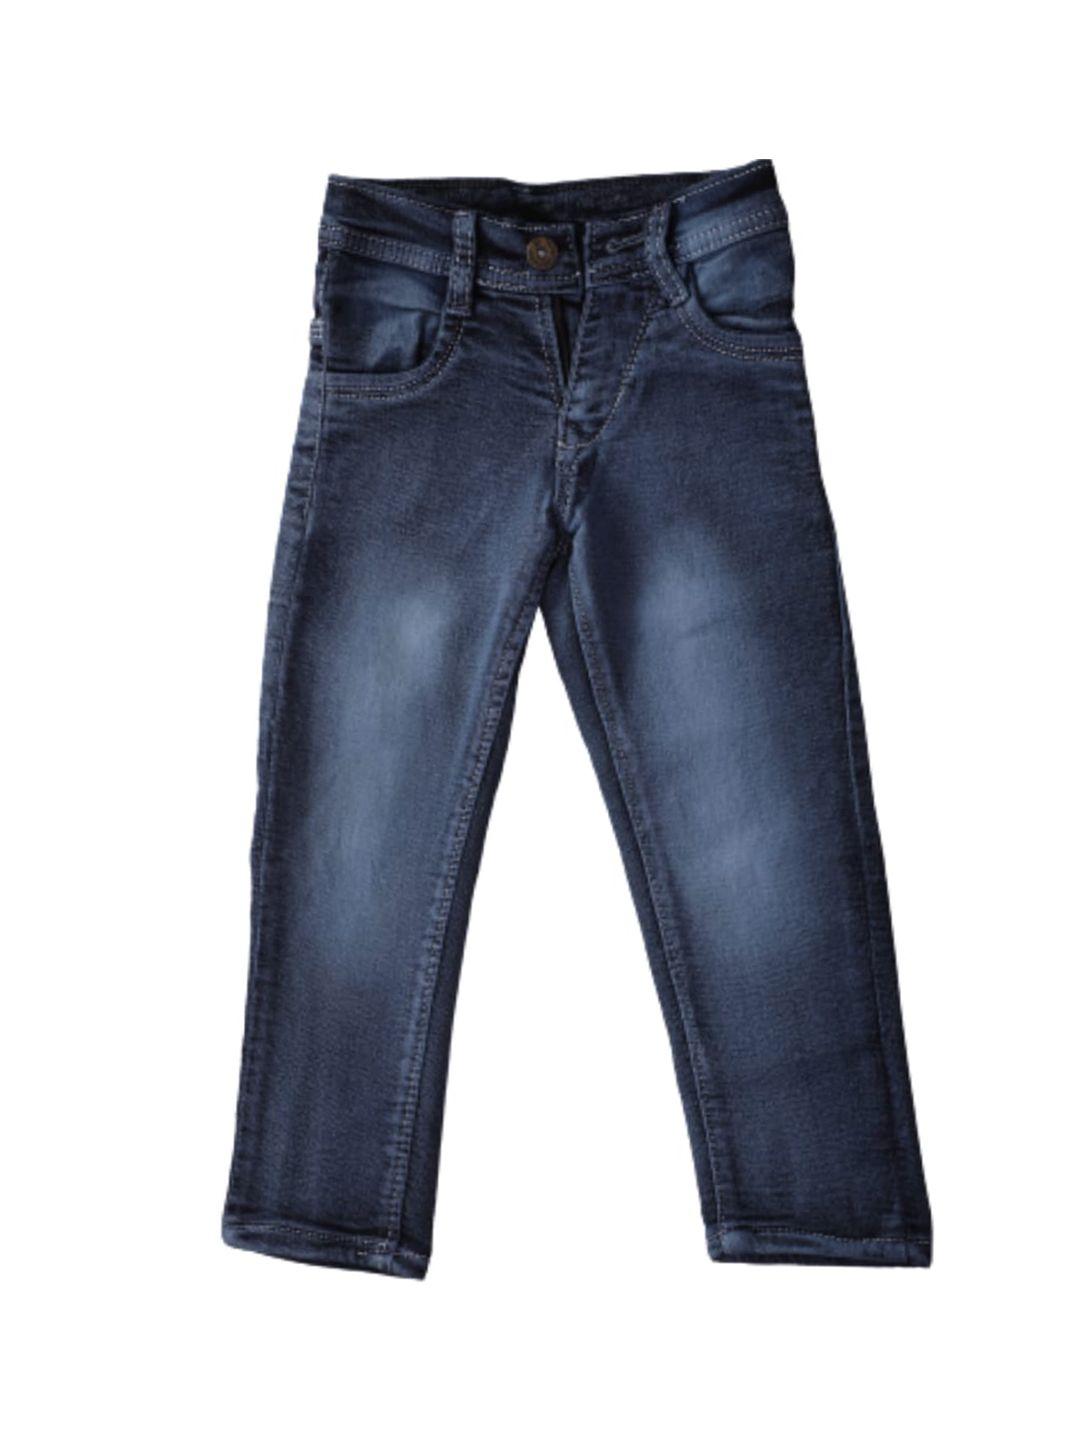 pro-ethic style developer boys blue jean low distress light fade stretchable jeans